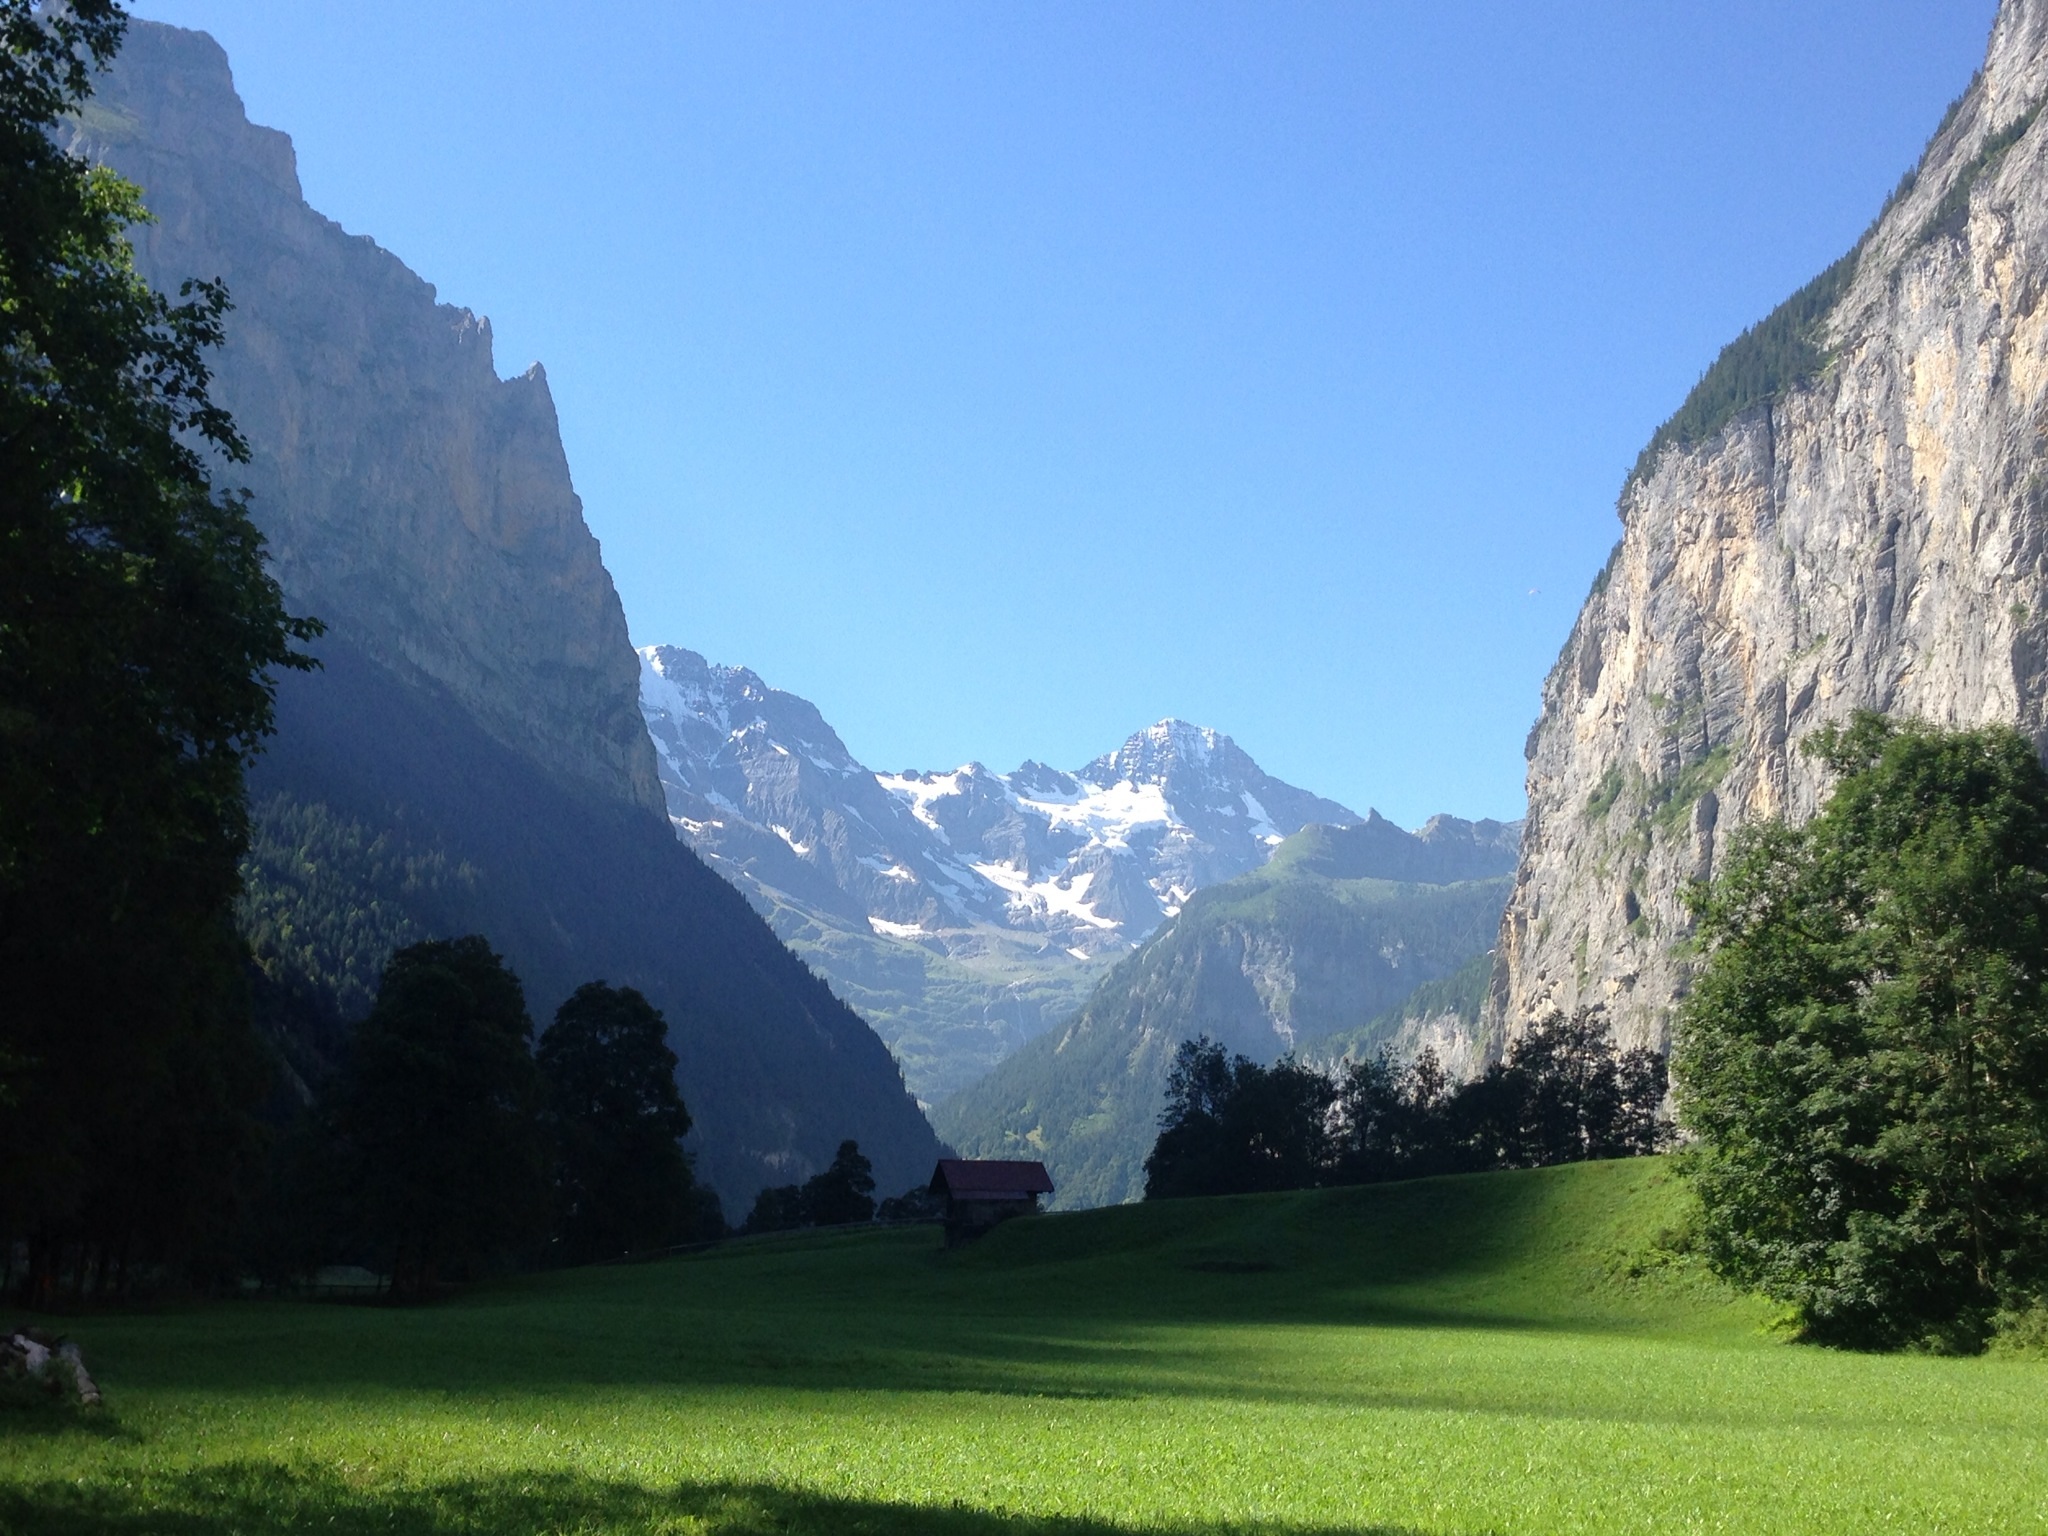 Walking through the Lauterbrunnen valley